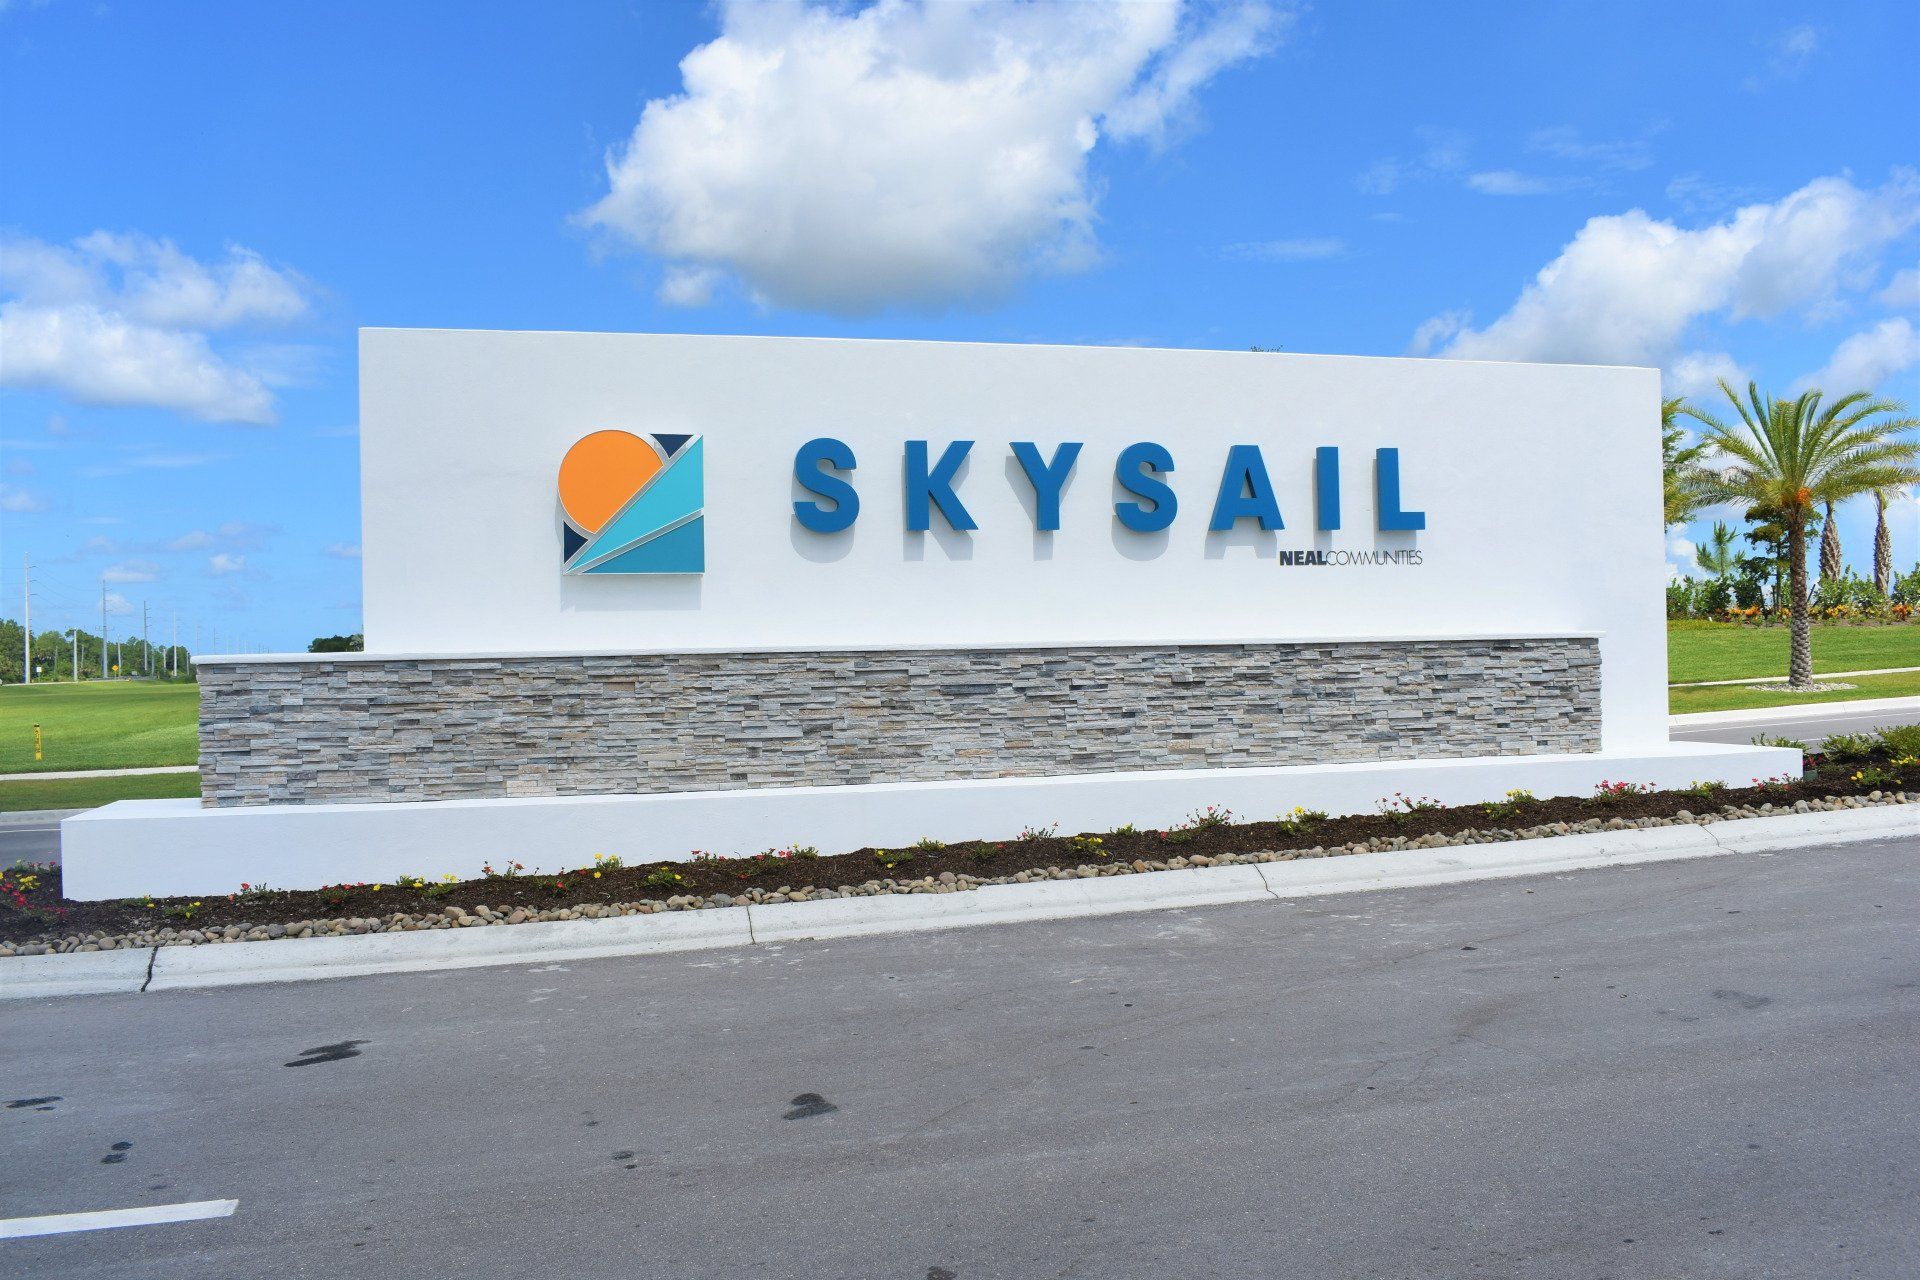 Skysail signage